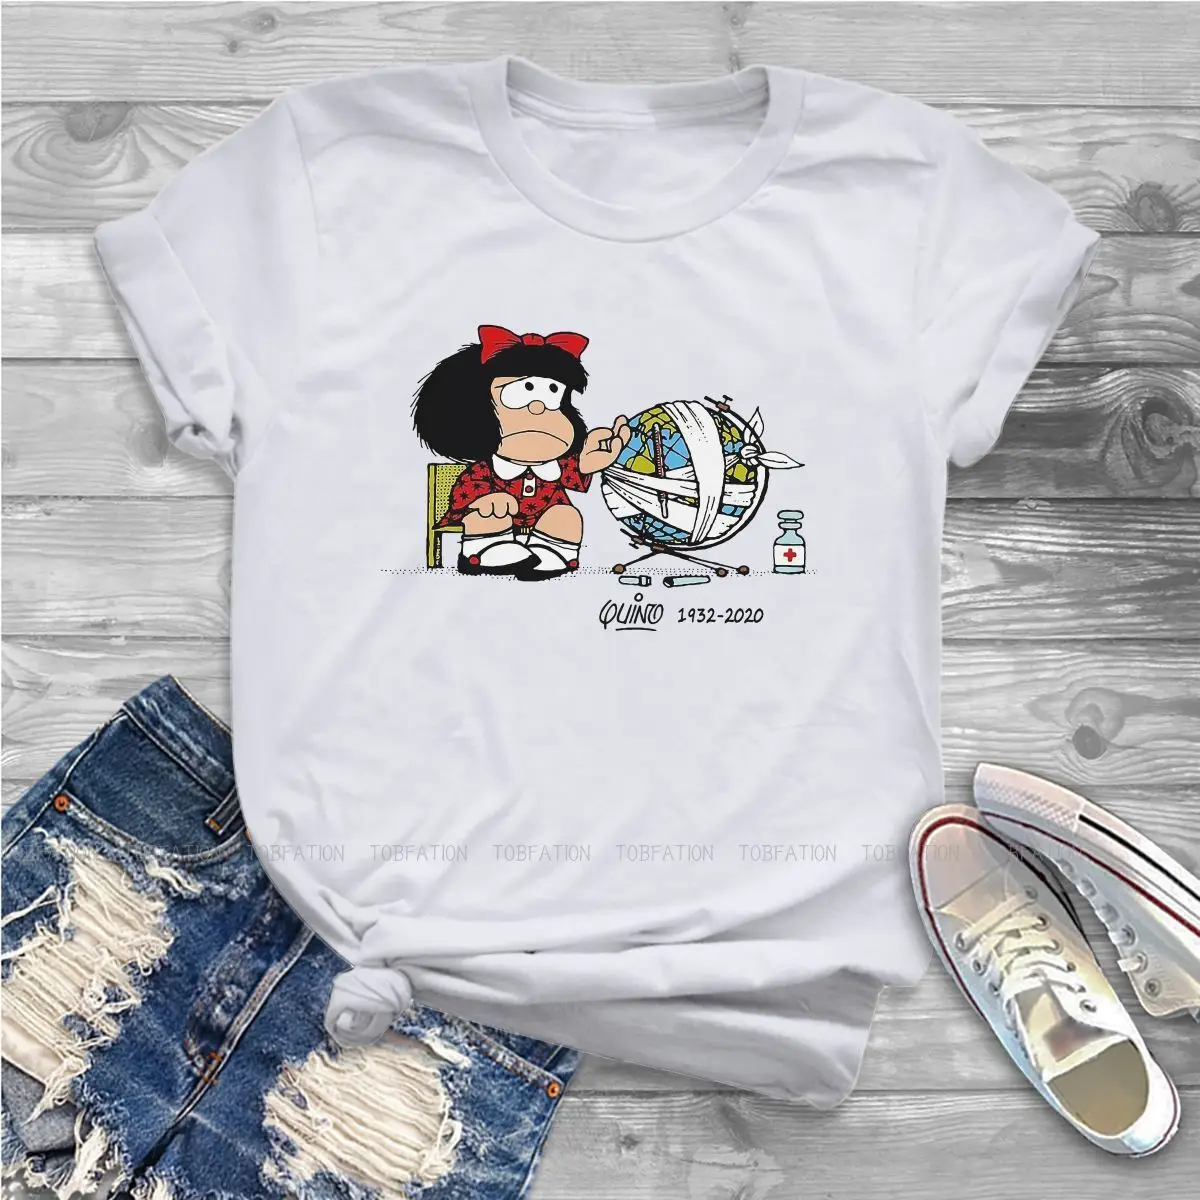 Adios Quino TShirt For Women Mafalda Comic Quino Tees Style Female T Shirt 4XL Homme Print Loose